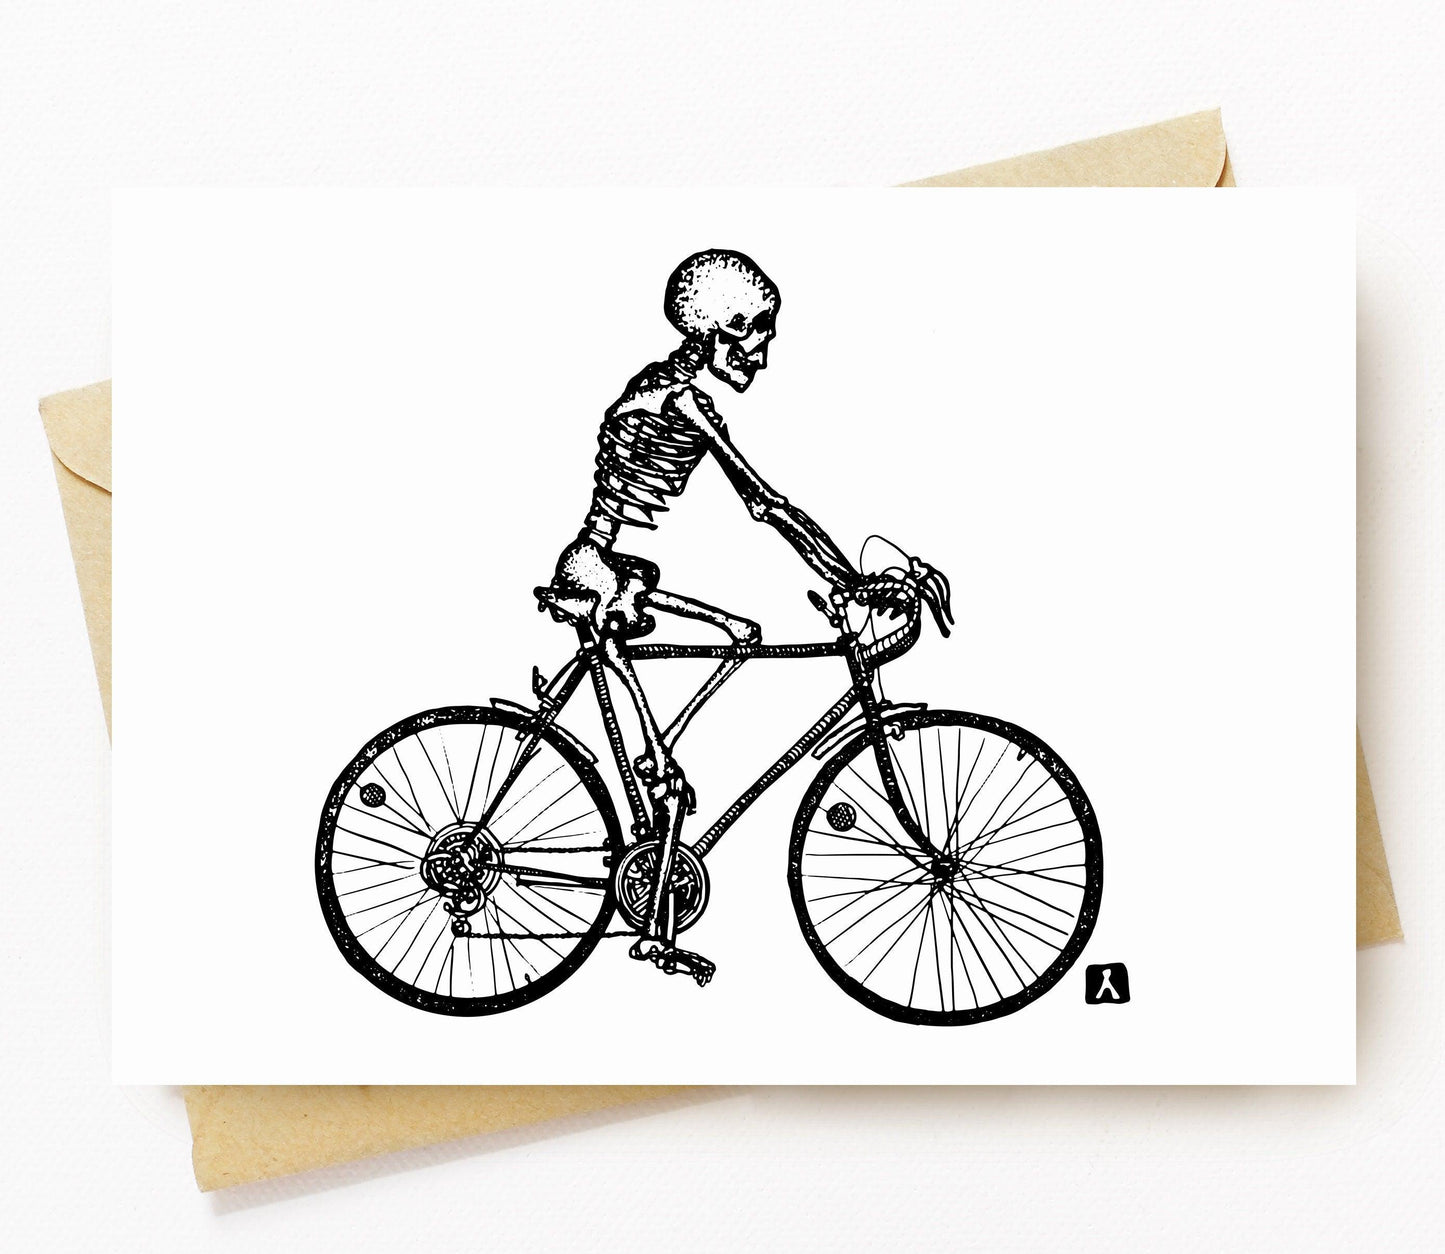 BellavanceInk: Greeting Card With Skeleton Riding Their Bike Down The Road 5 x 7 Inches - BellavanceInk